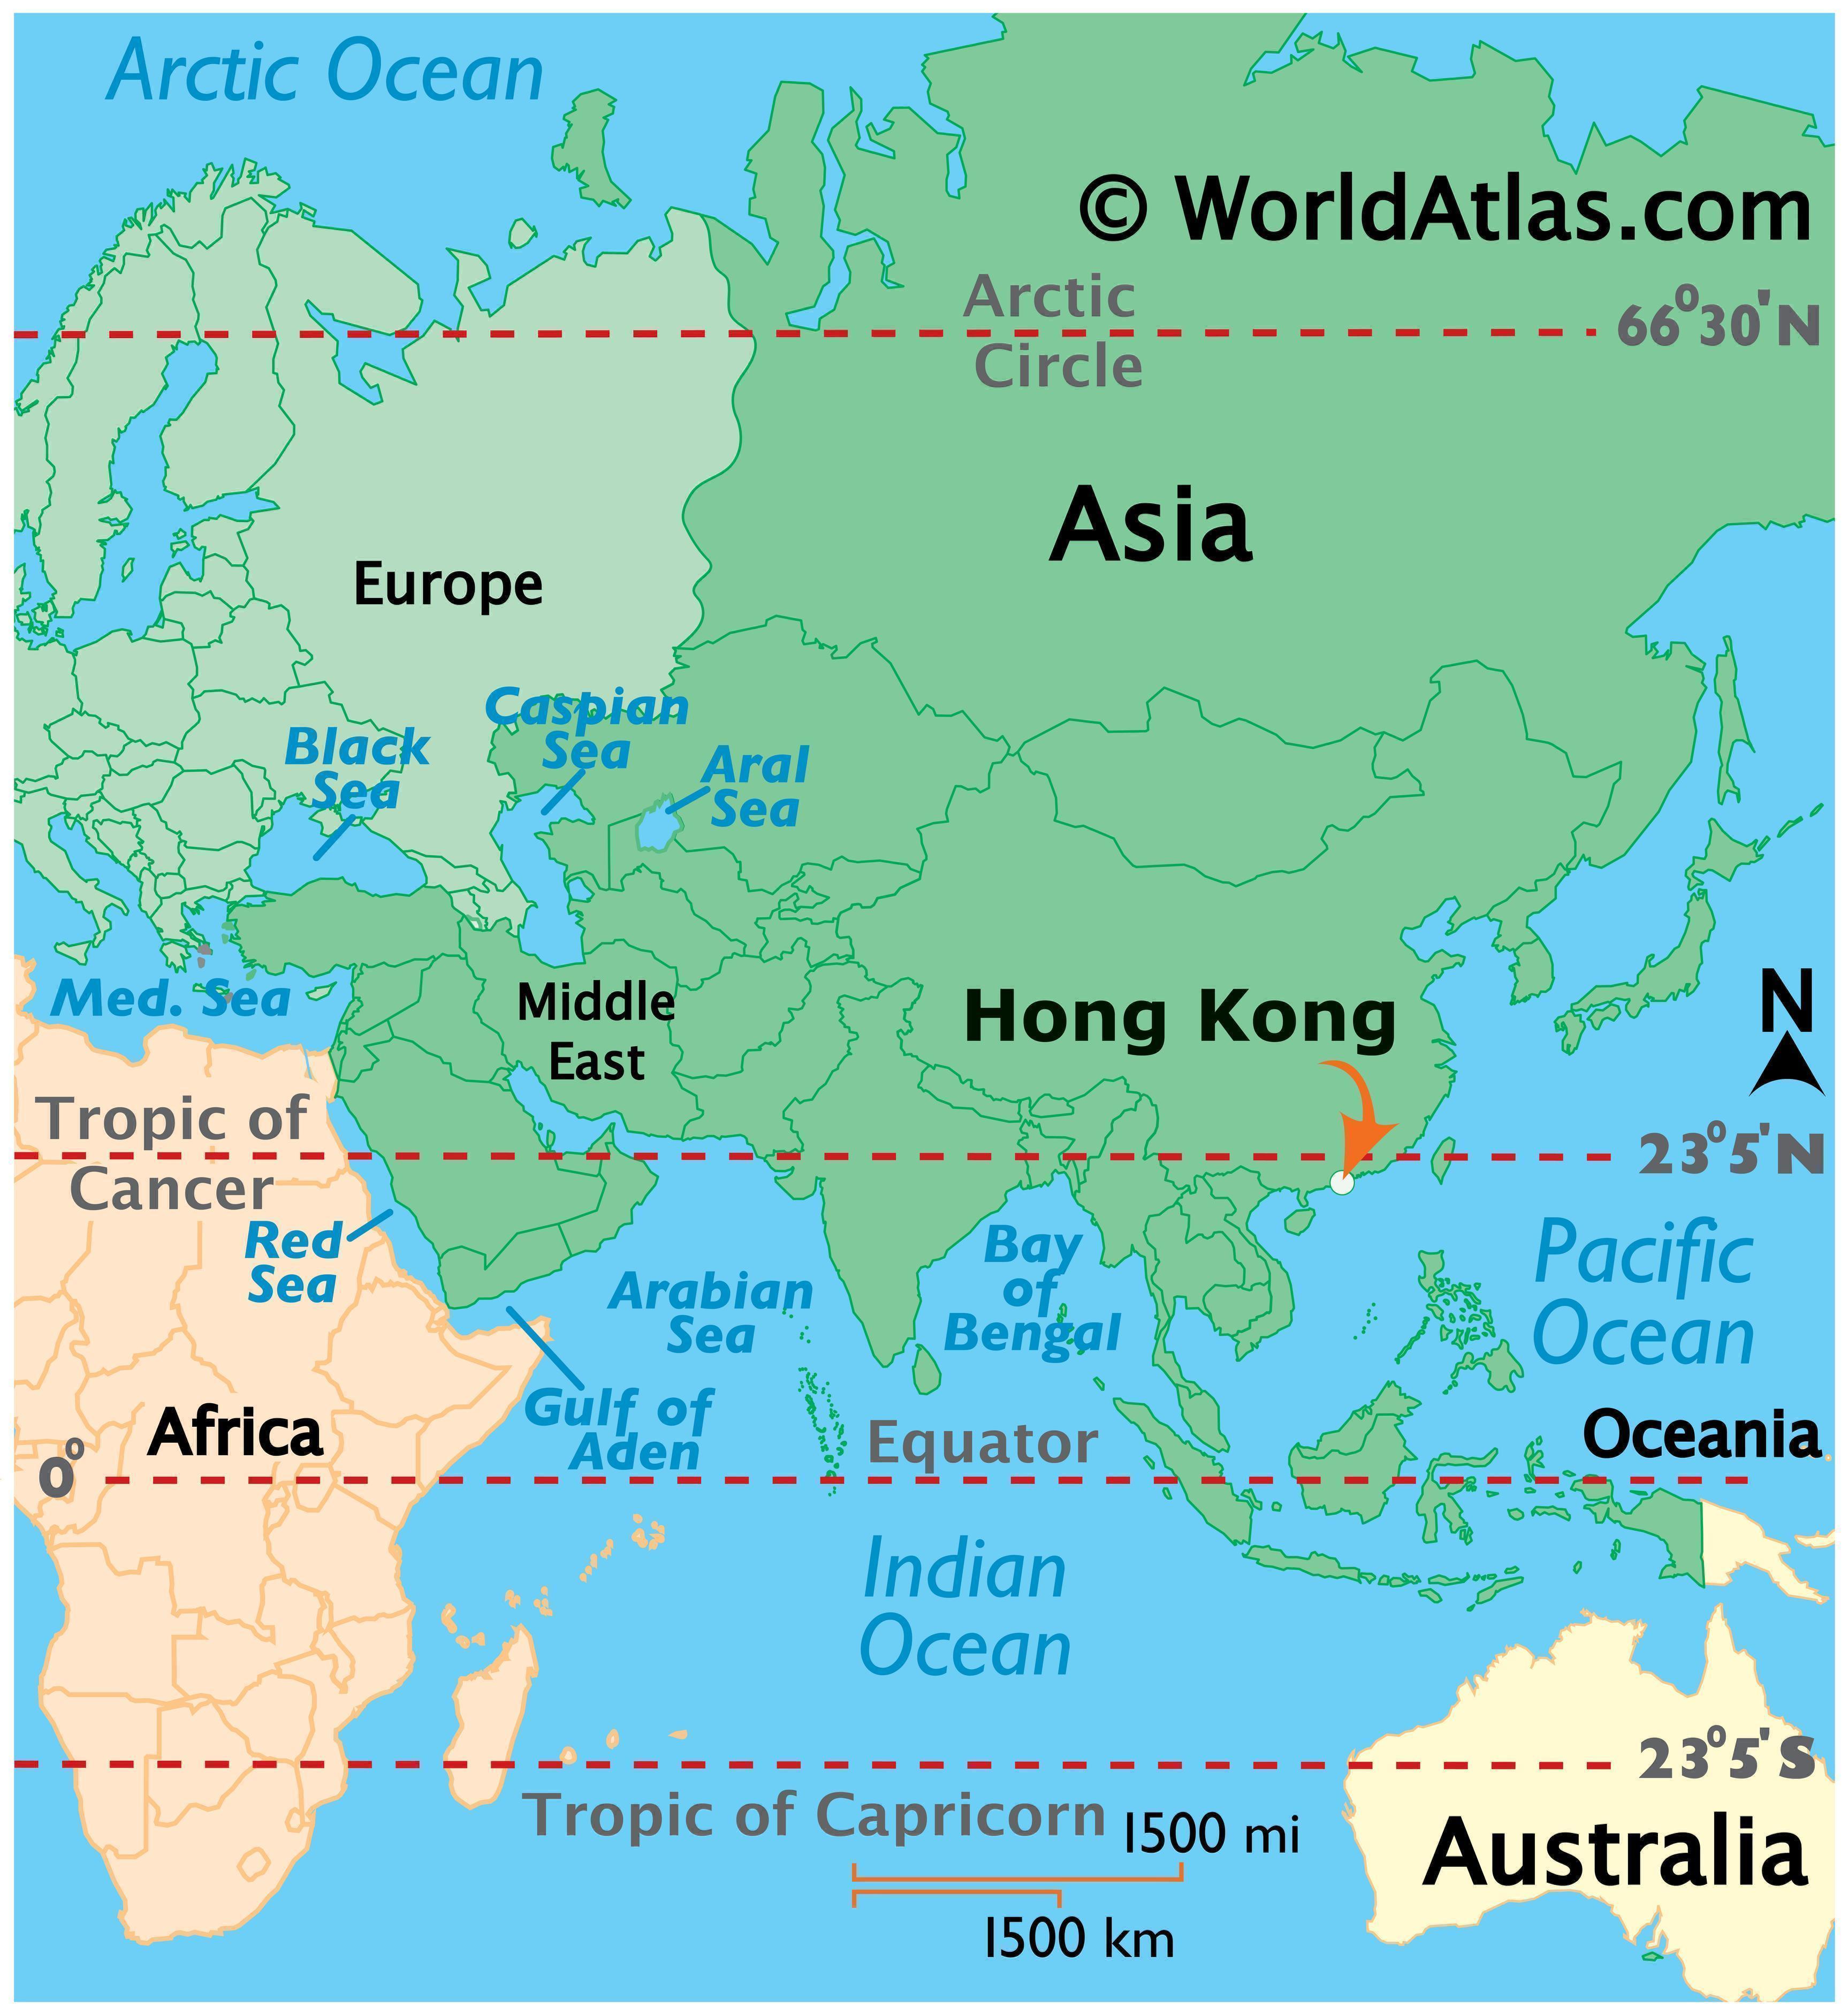 Hong Kong Map / Geography of Hong Kong / Map of Hong Kong - Worldatlas.com